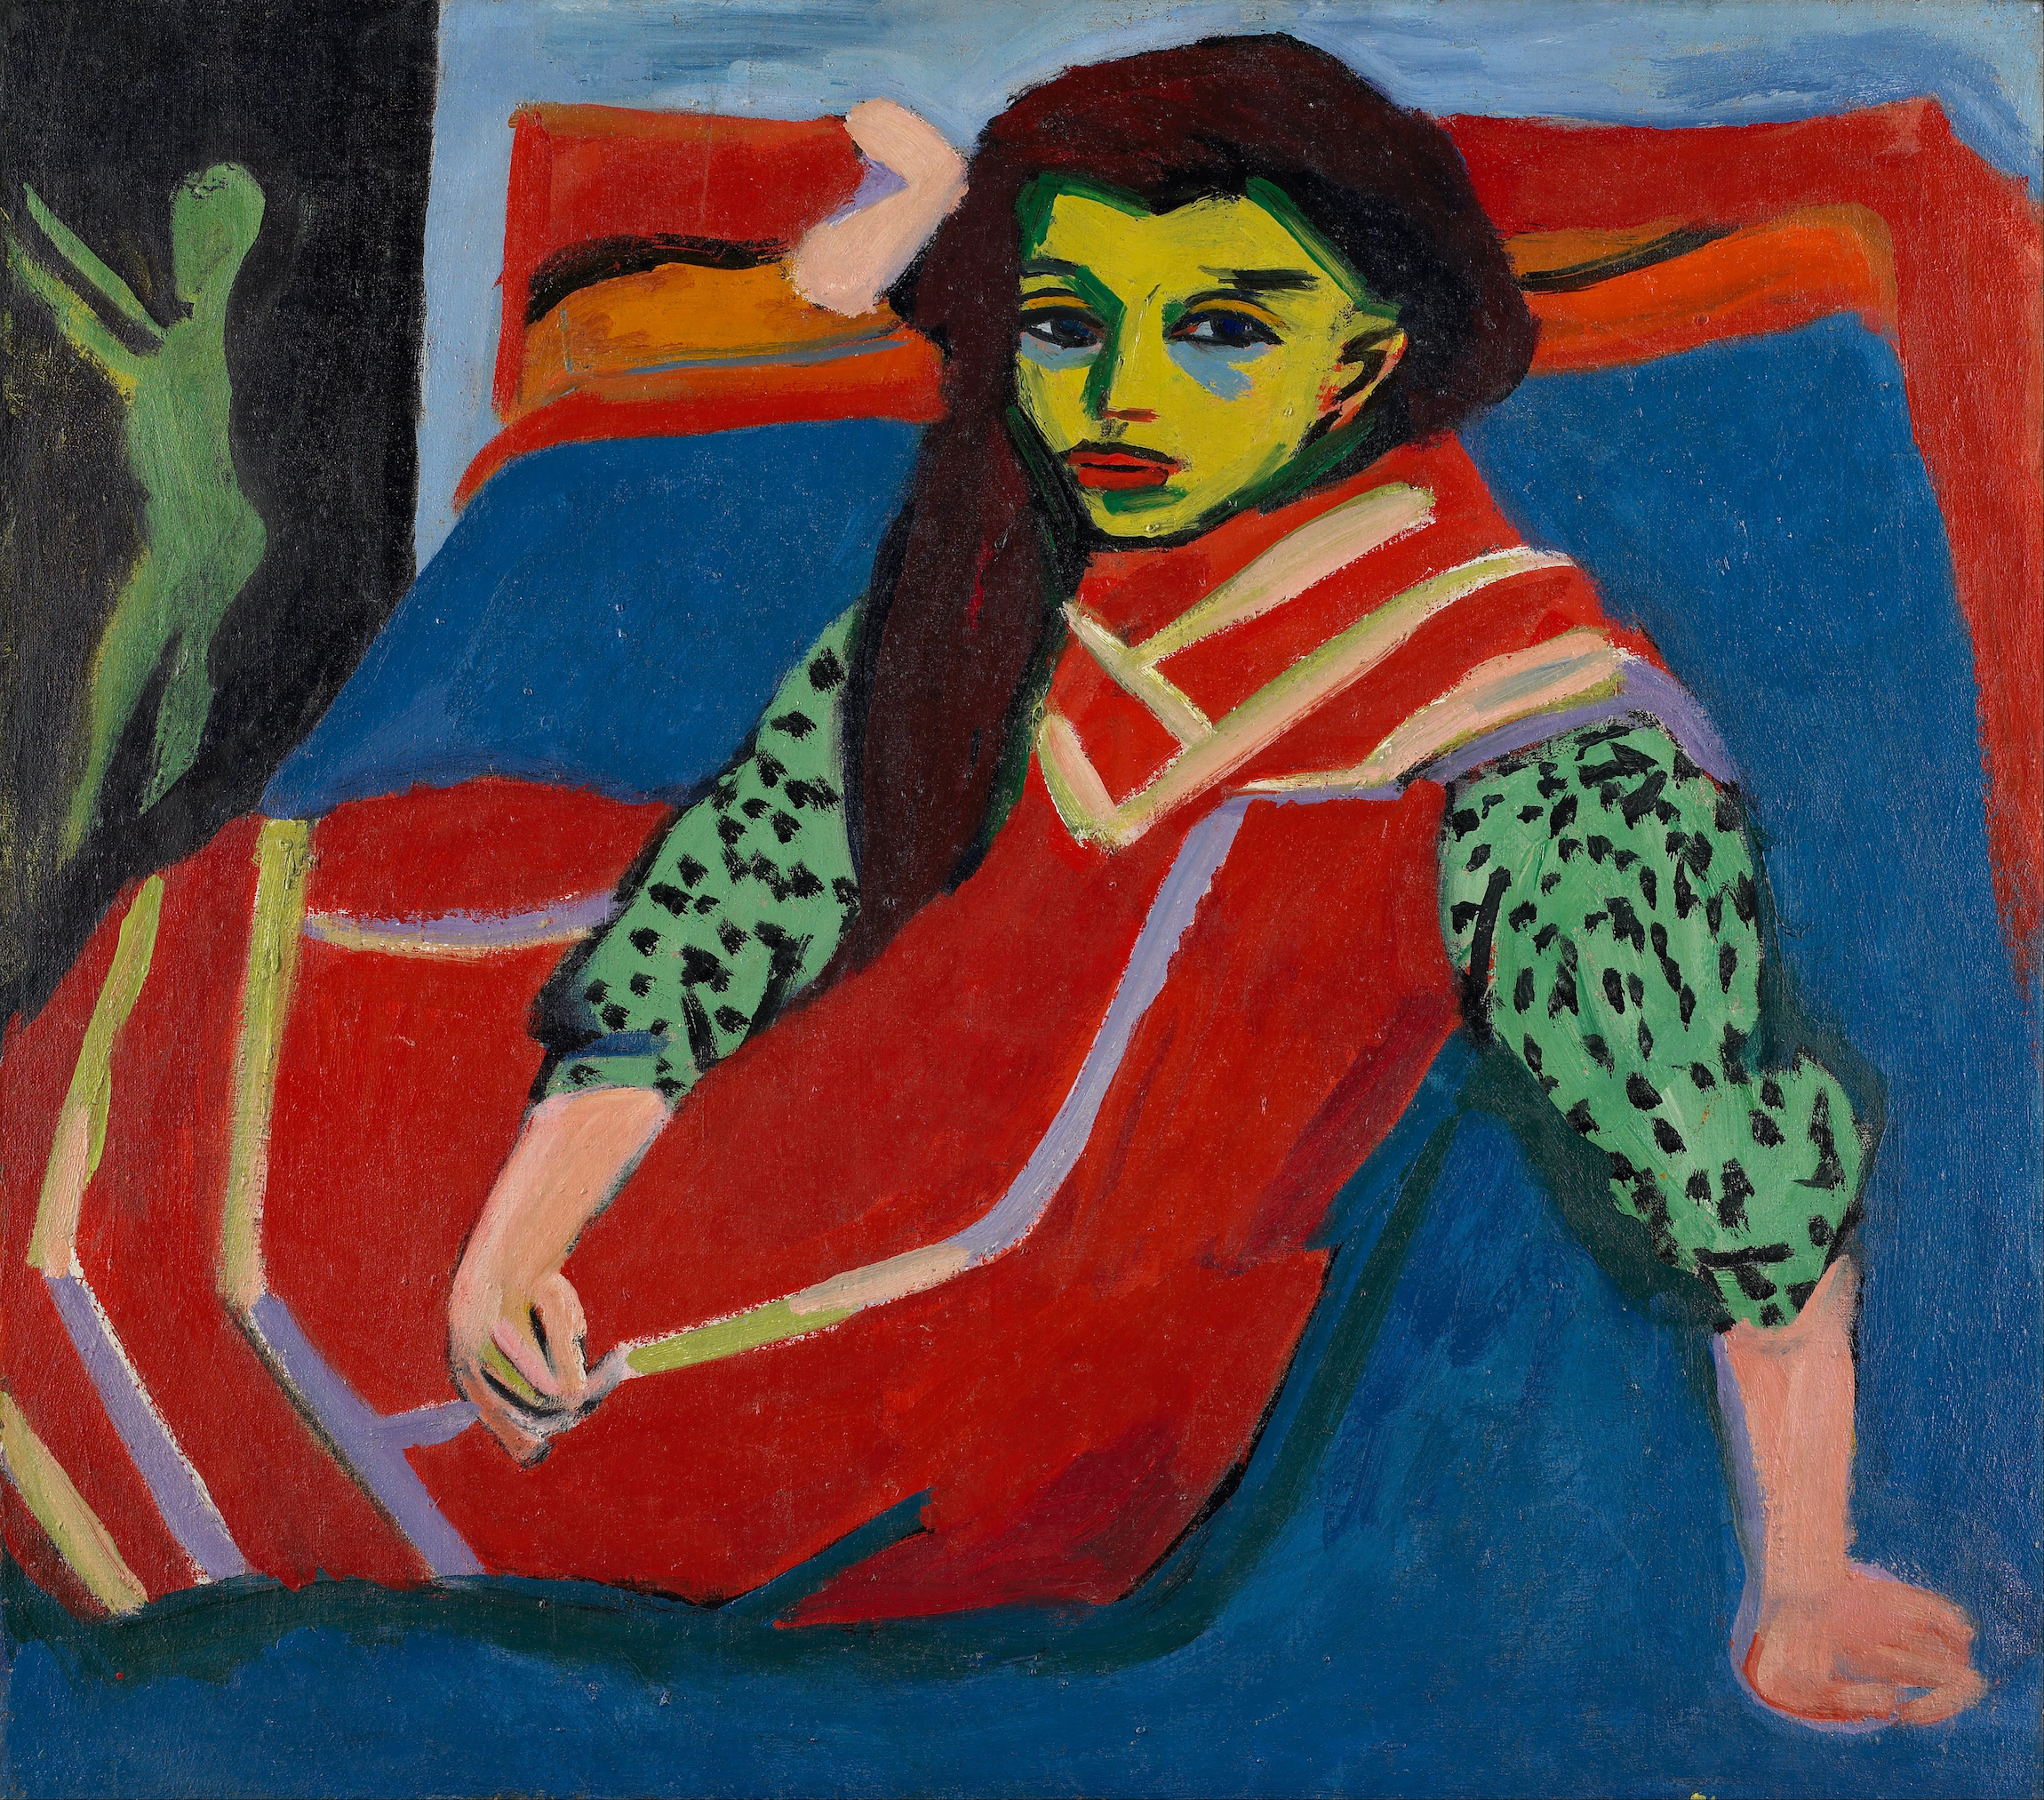 Seated Girl (Fränzi Fehrmann) by Ernst Ludwig Kirchner - 1910 - 75.5 x 99.5 cm Minneapolis Institute of Art